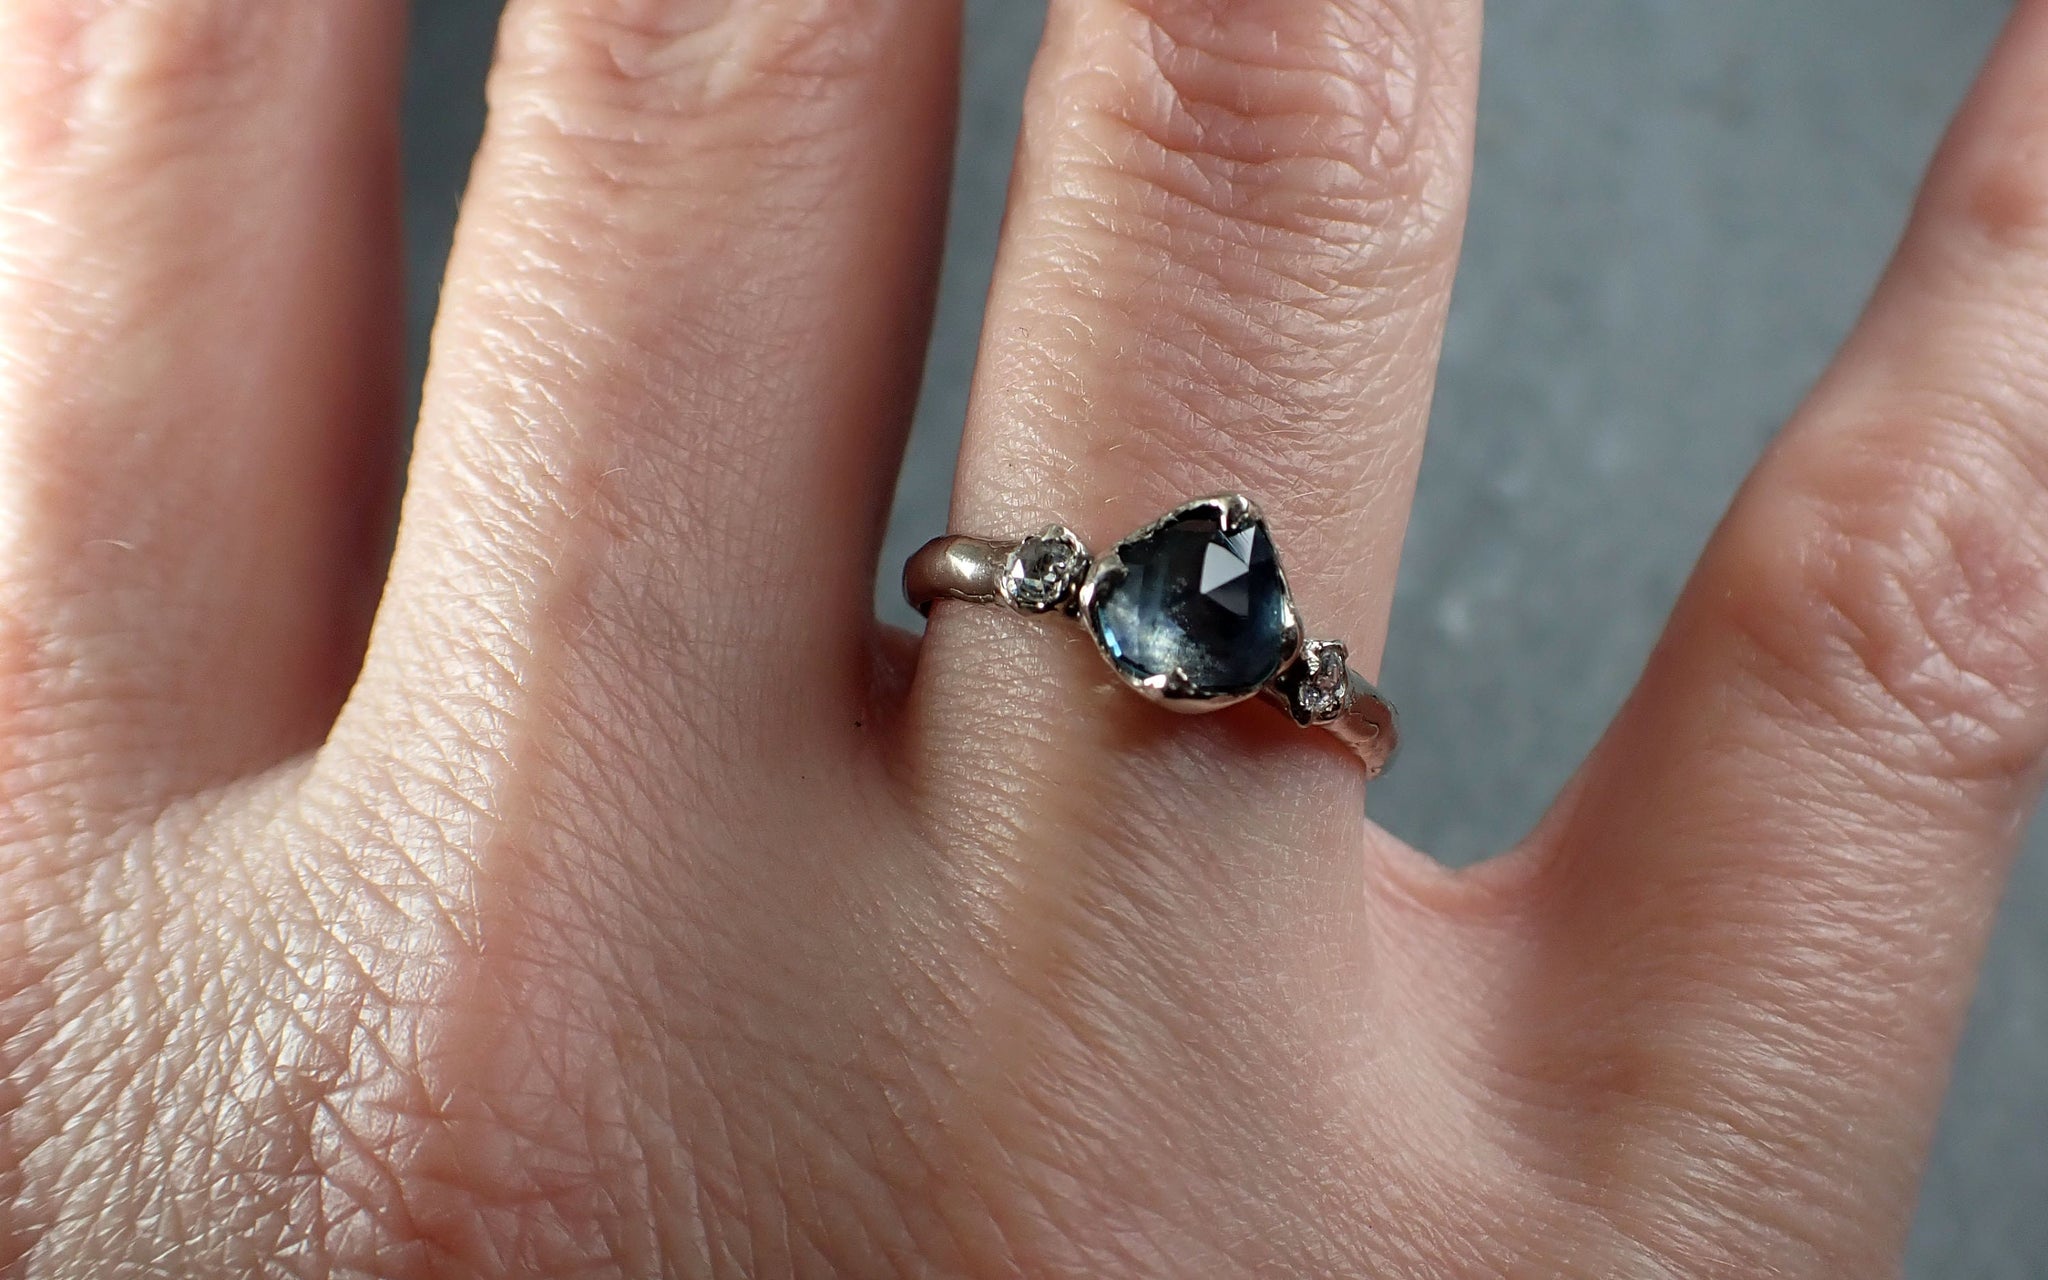 Fancy cut blue Montana Sapphire and fancy Diamonds 14k White Gold Engagement Wedding Ring Gemstone Ring Multi stone Ring 3169